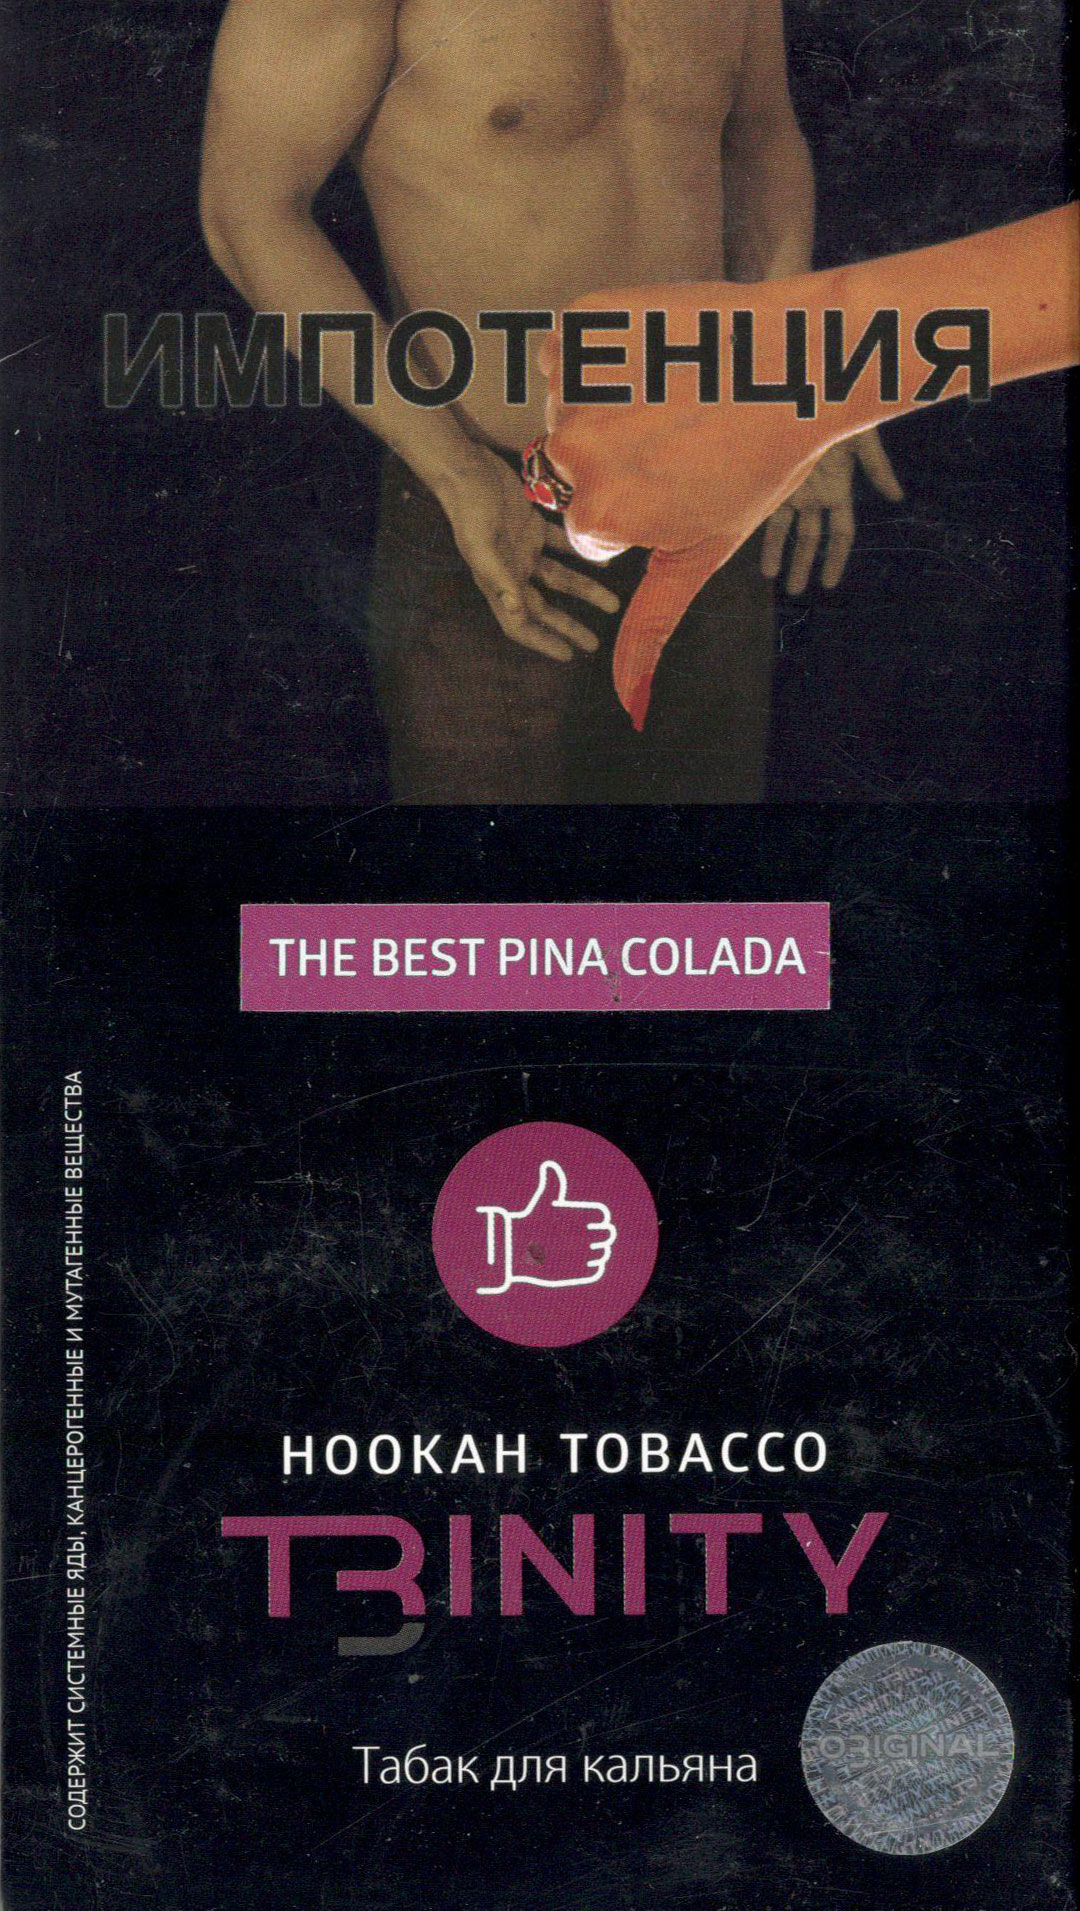 Табак Trinity - Самая Лучшая Пина Колада (The Best Pina Colada) 100 гр фото